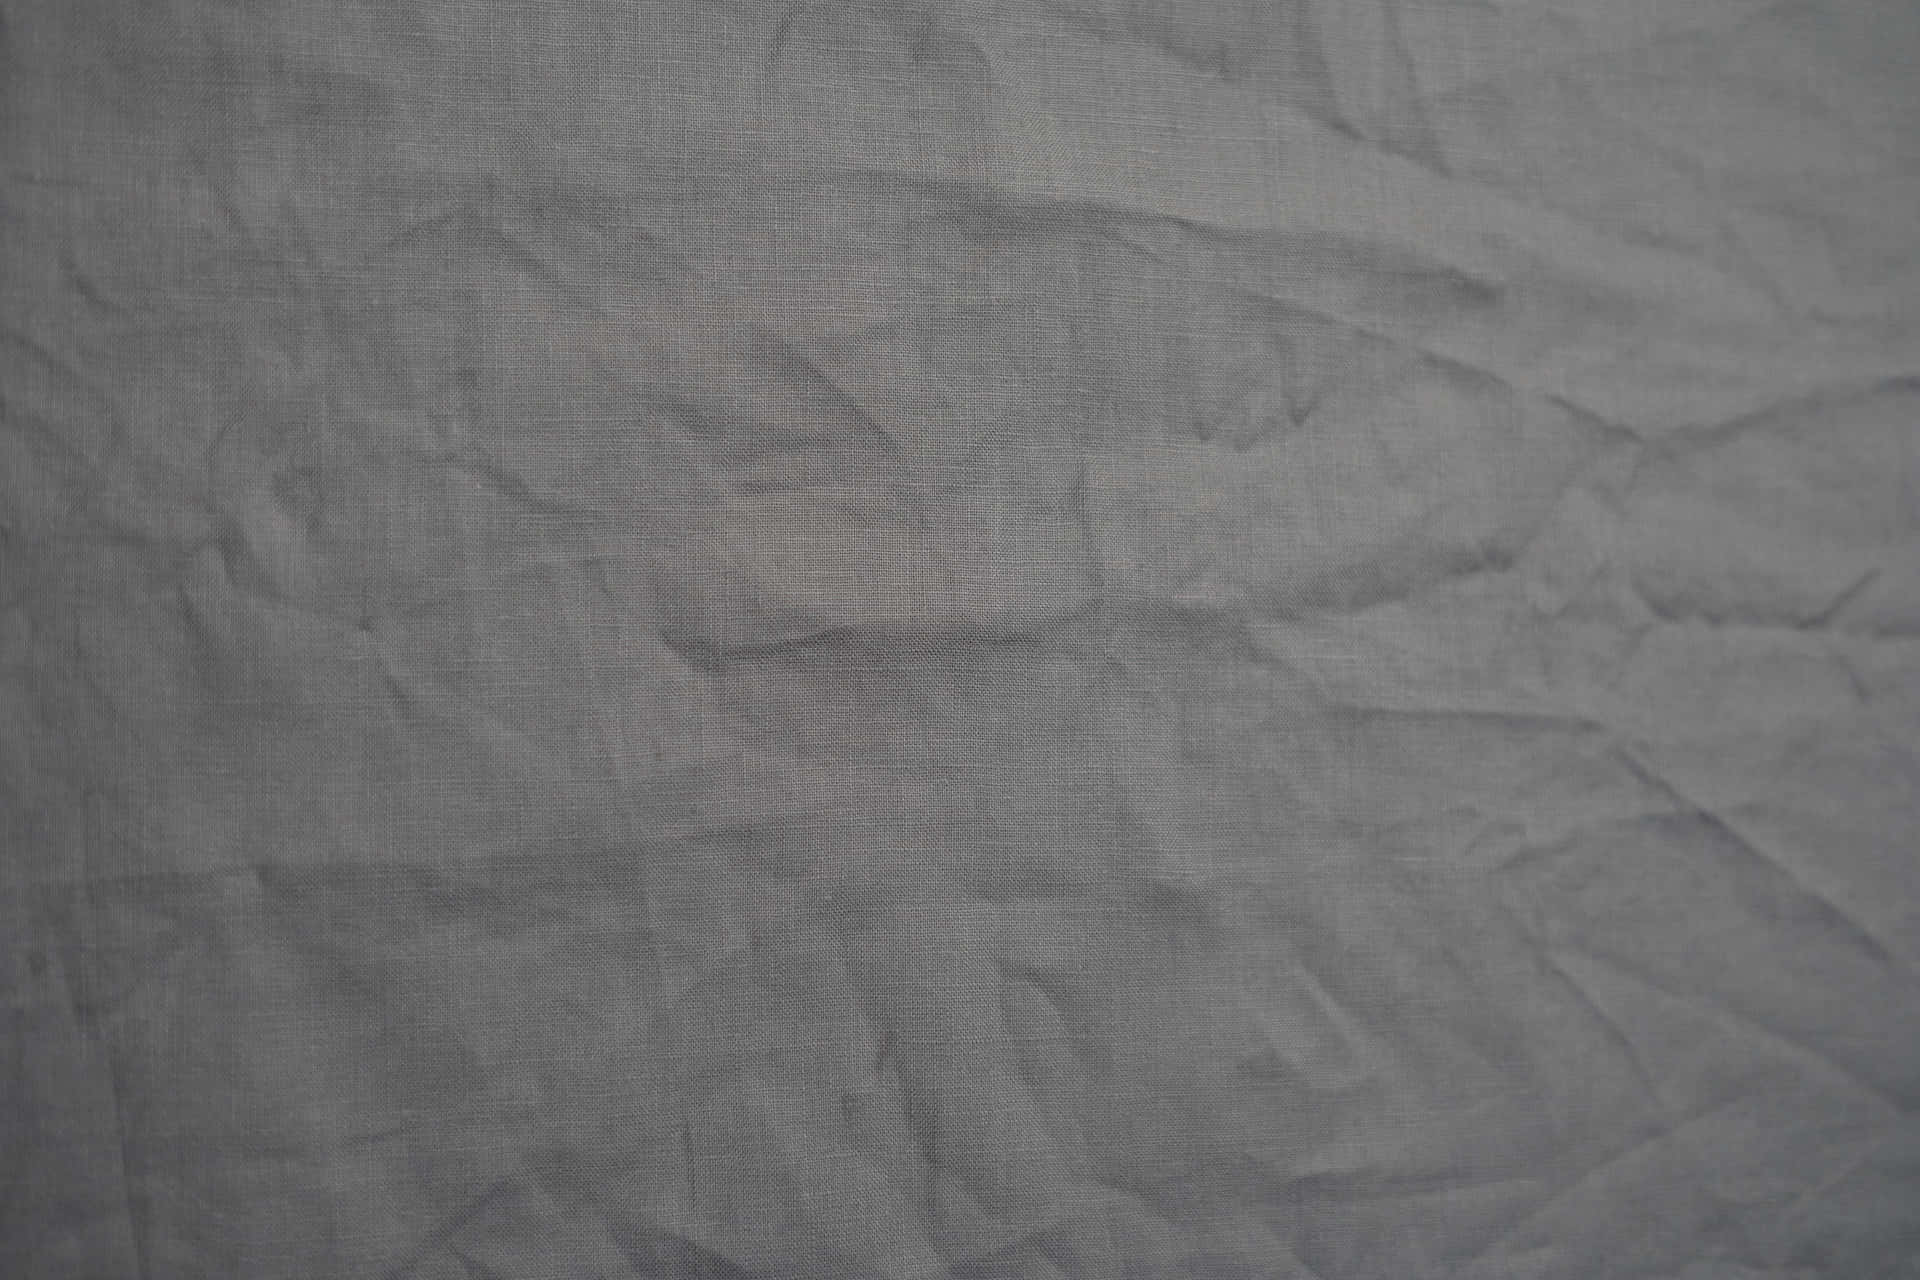 A Close Up Of A Grey Fabric